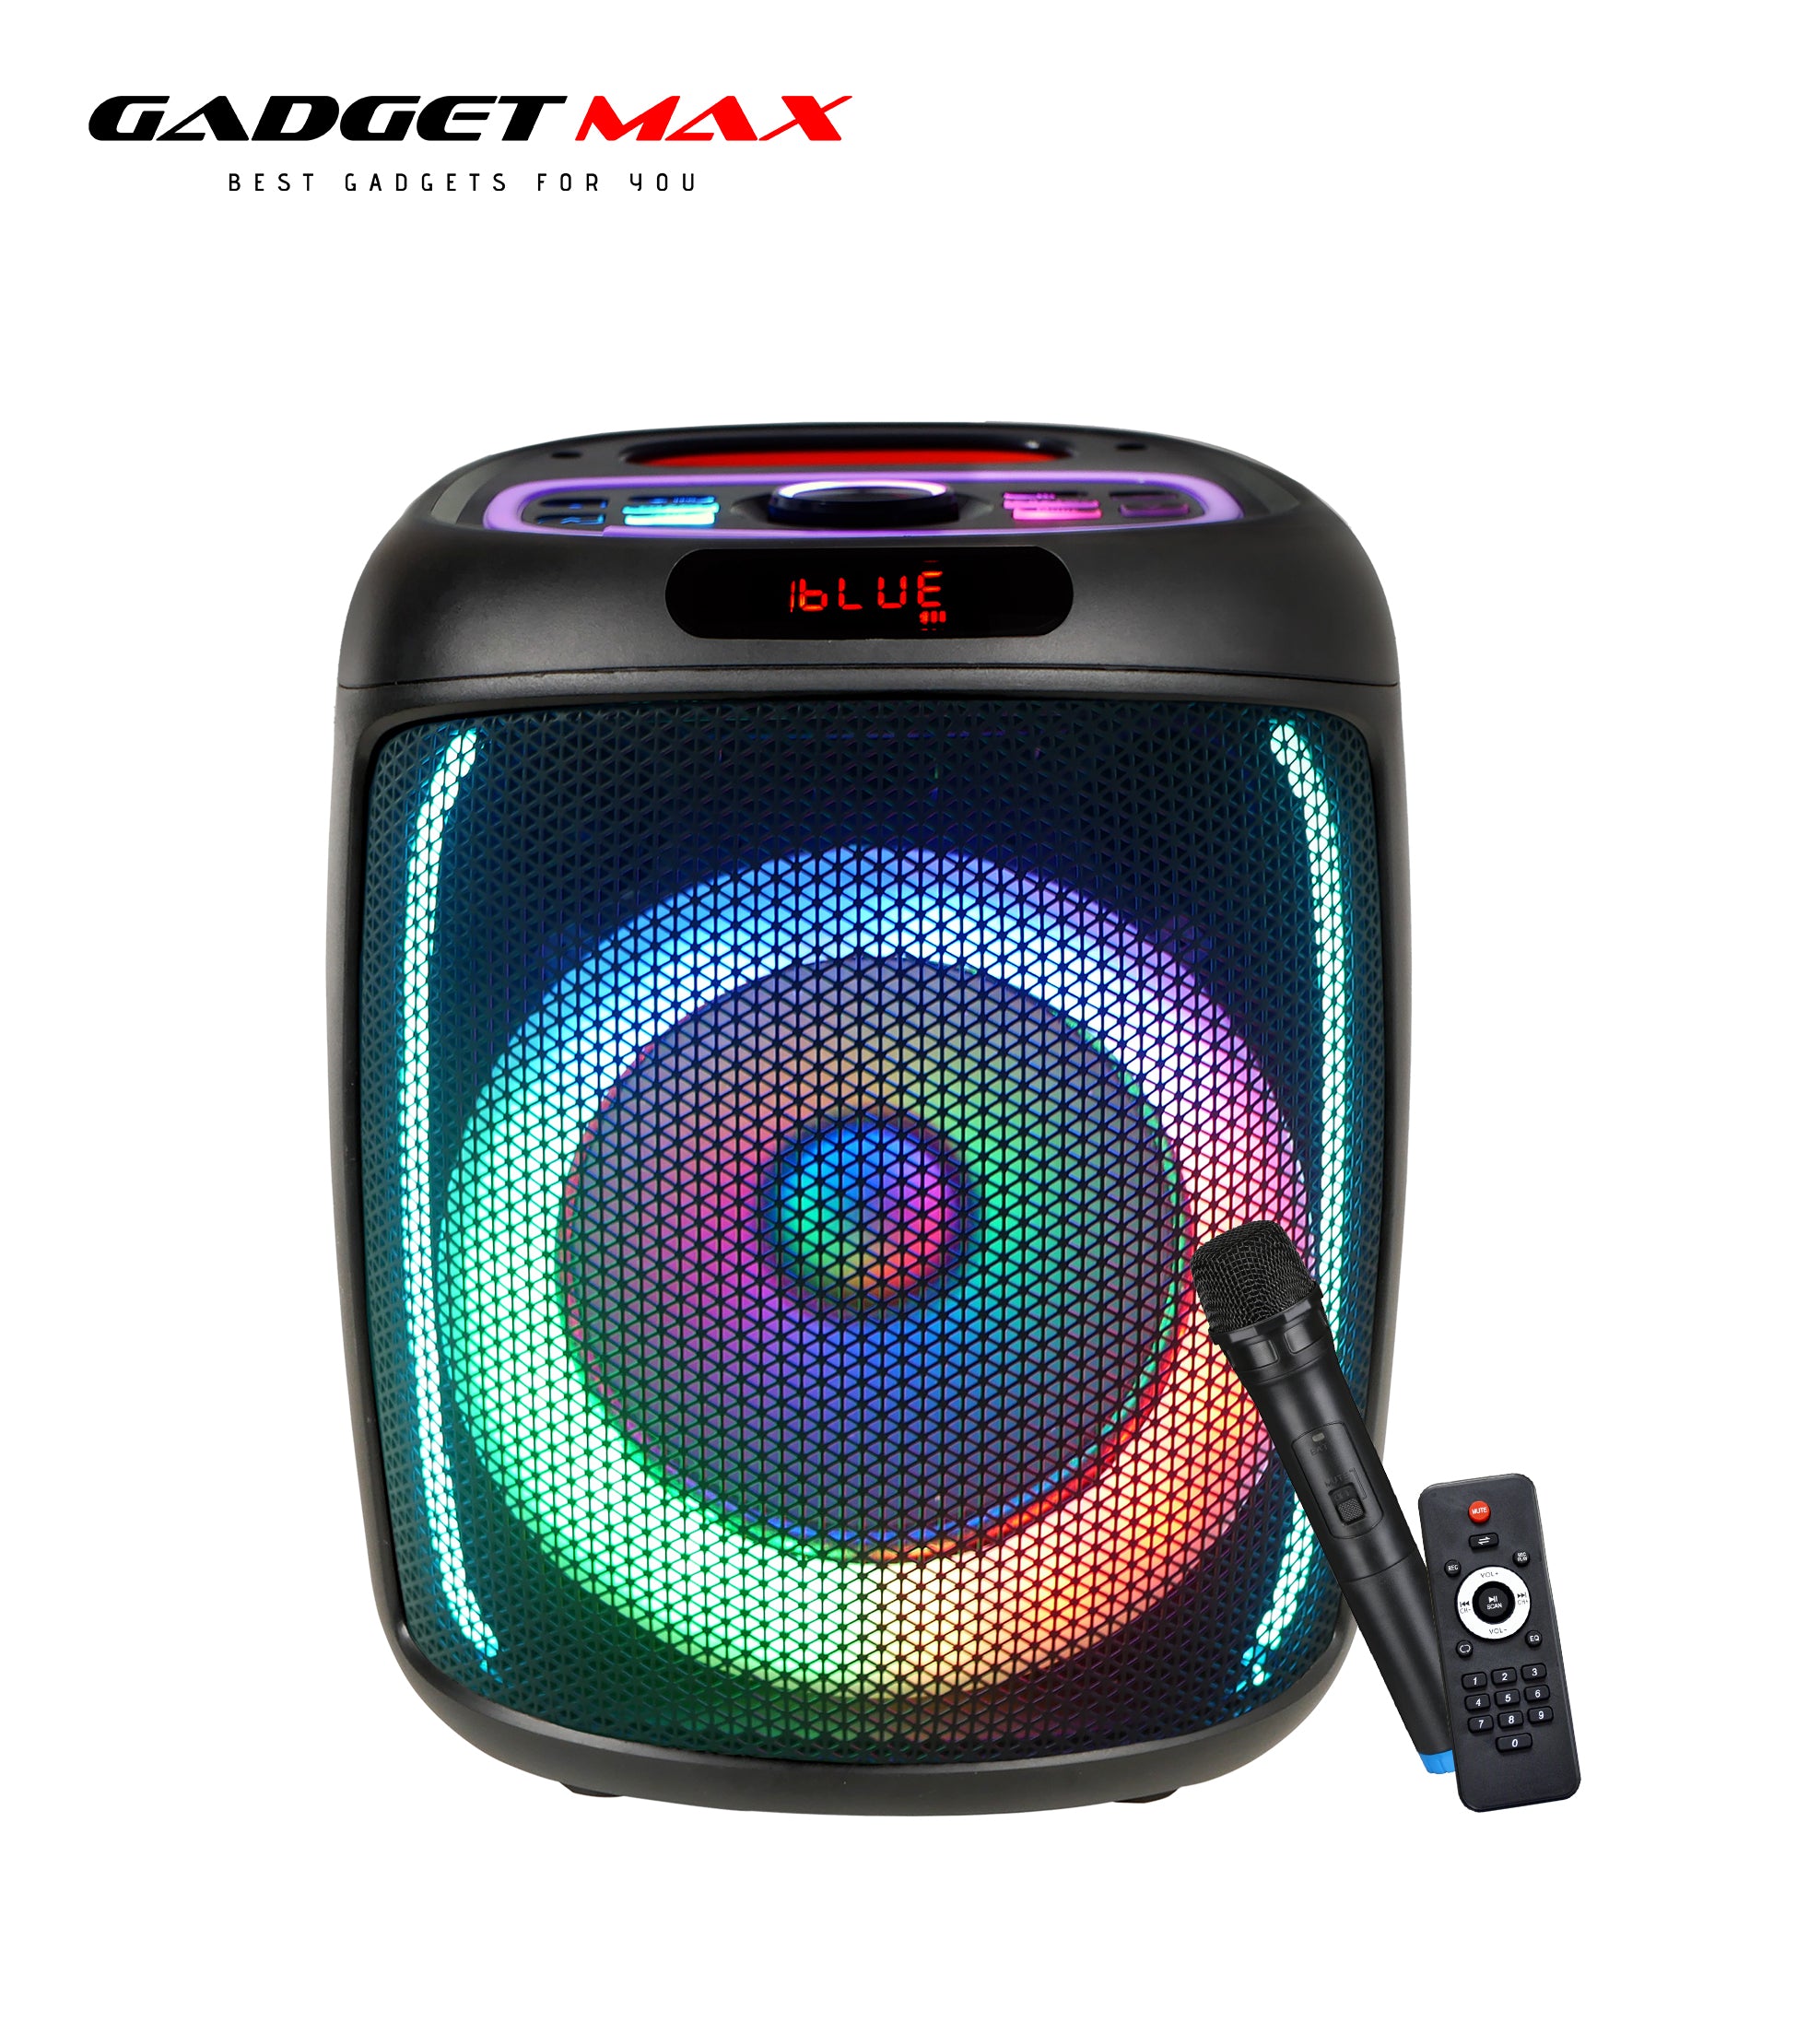 GADGET MAX GMPT-40 PARTY BOX 40W (8"*1) BLUETOOTH Outdoor SPEAKER , Karaoke Speaker